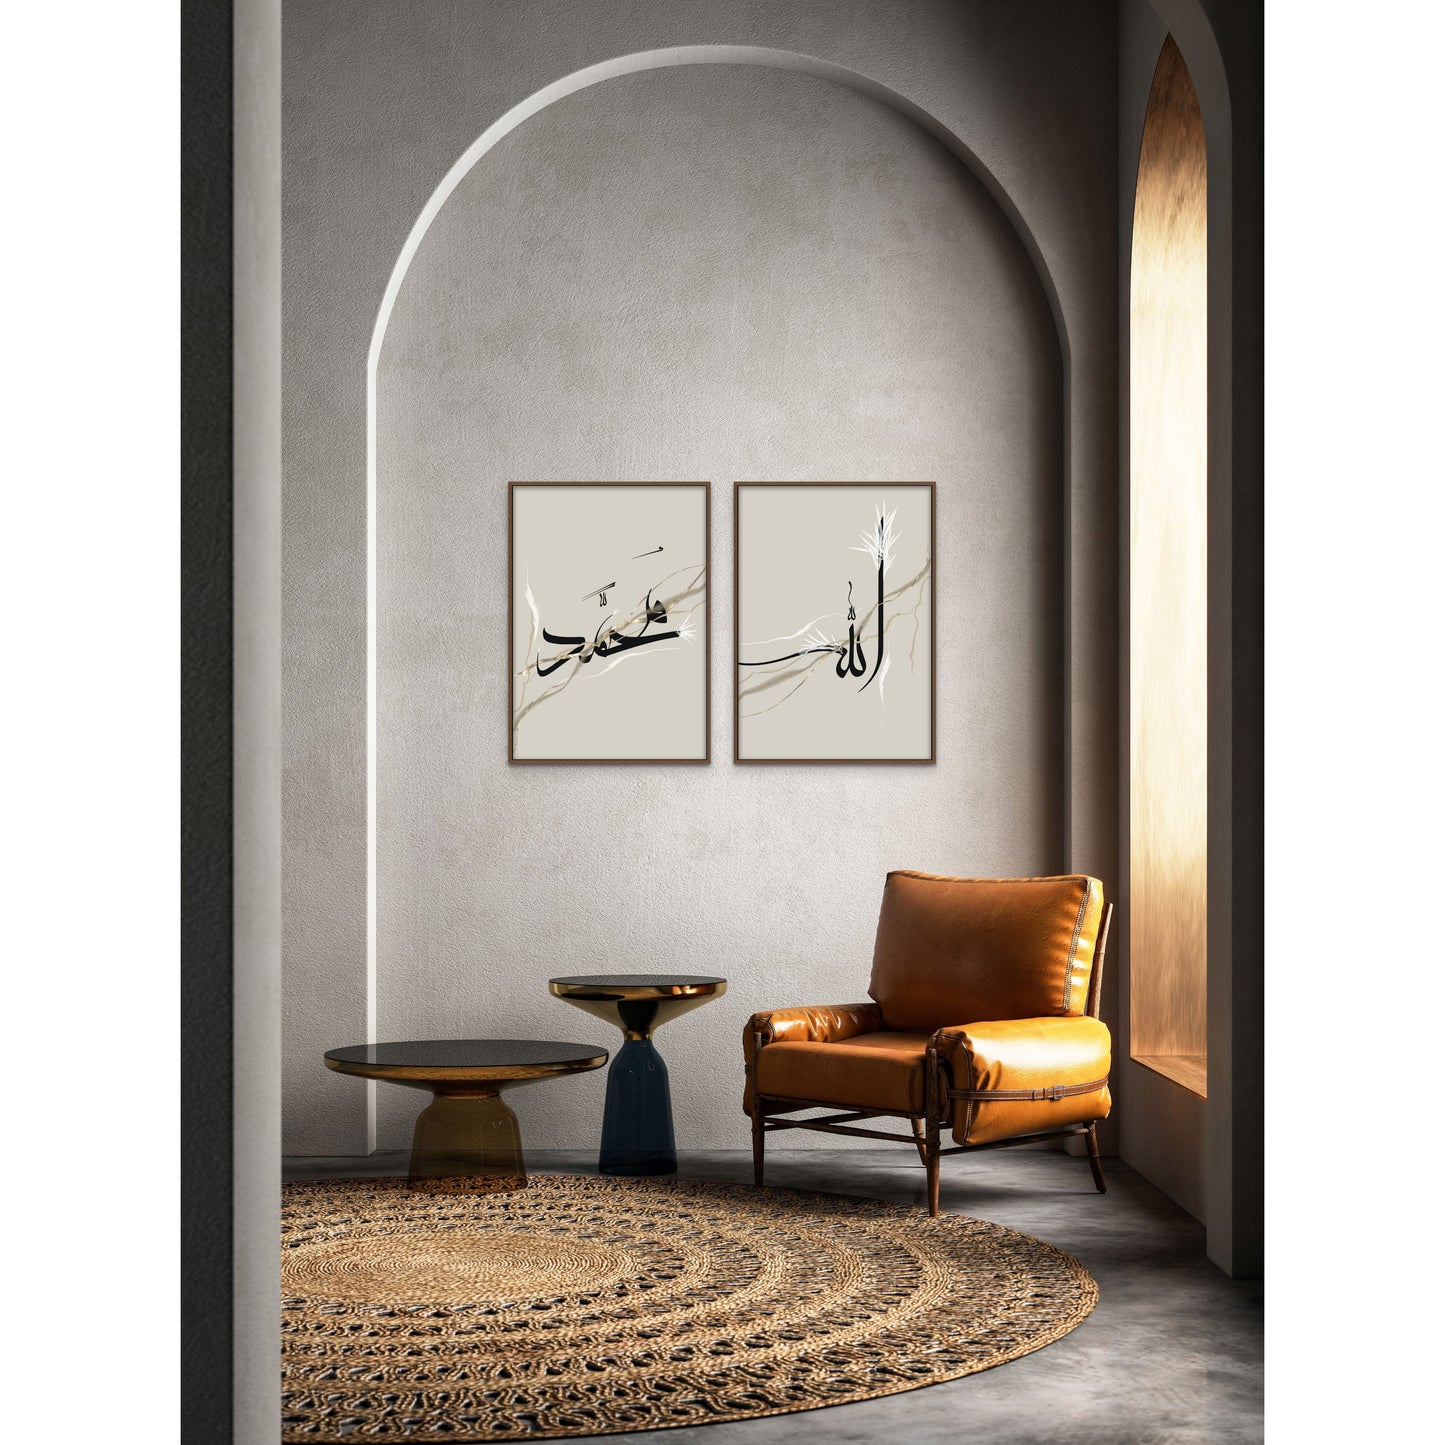 Allah (swt) & Muhammad (saw) Fine Art Prints: Gilded Vines